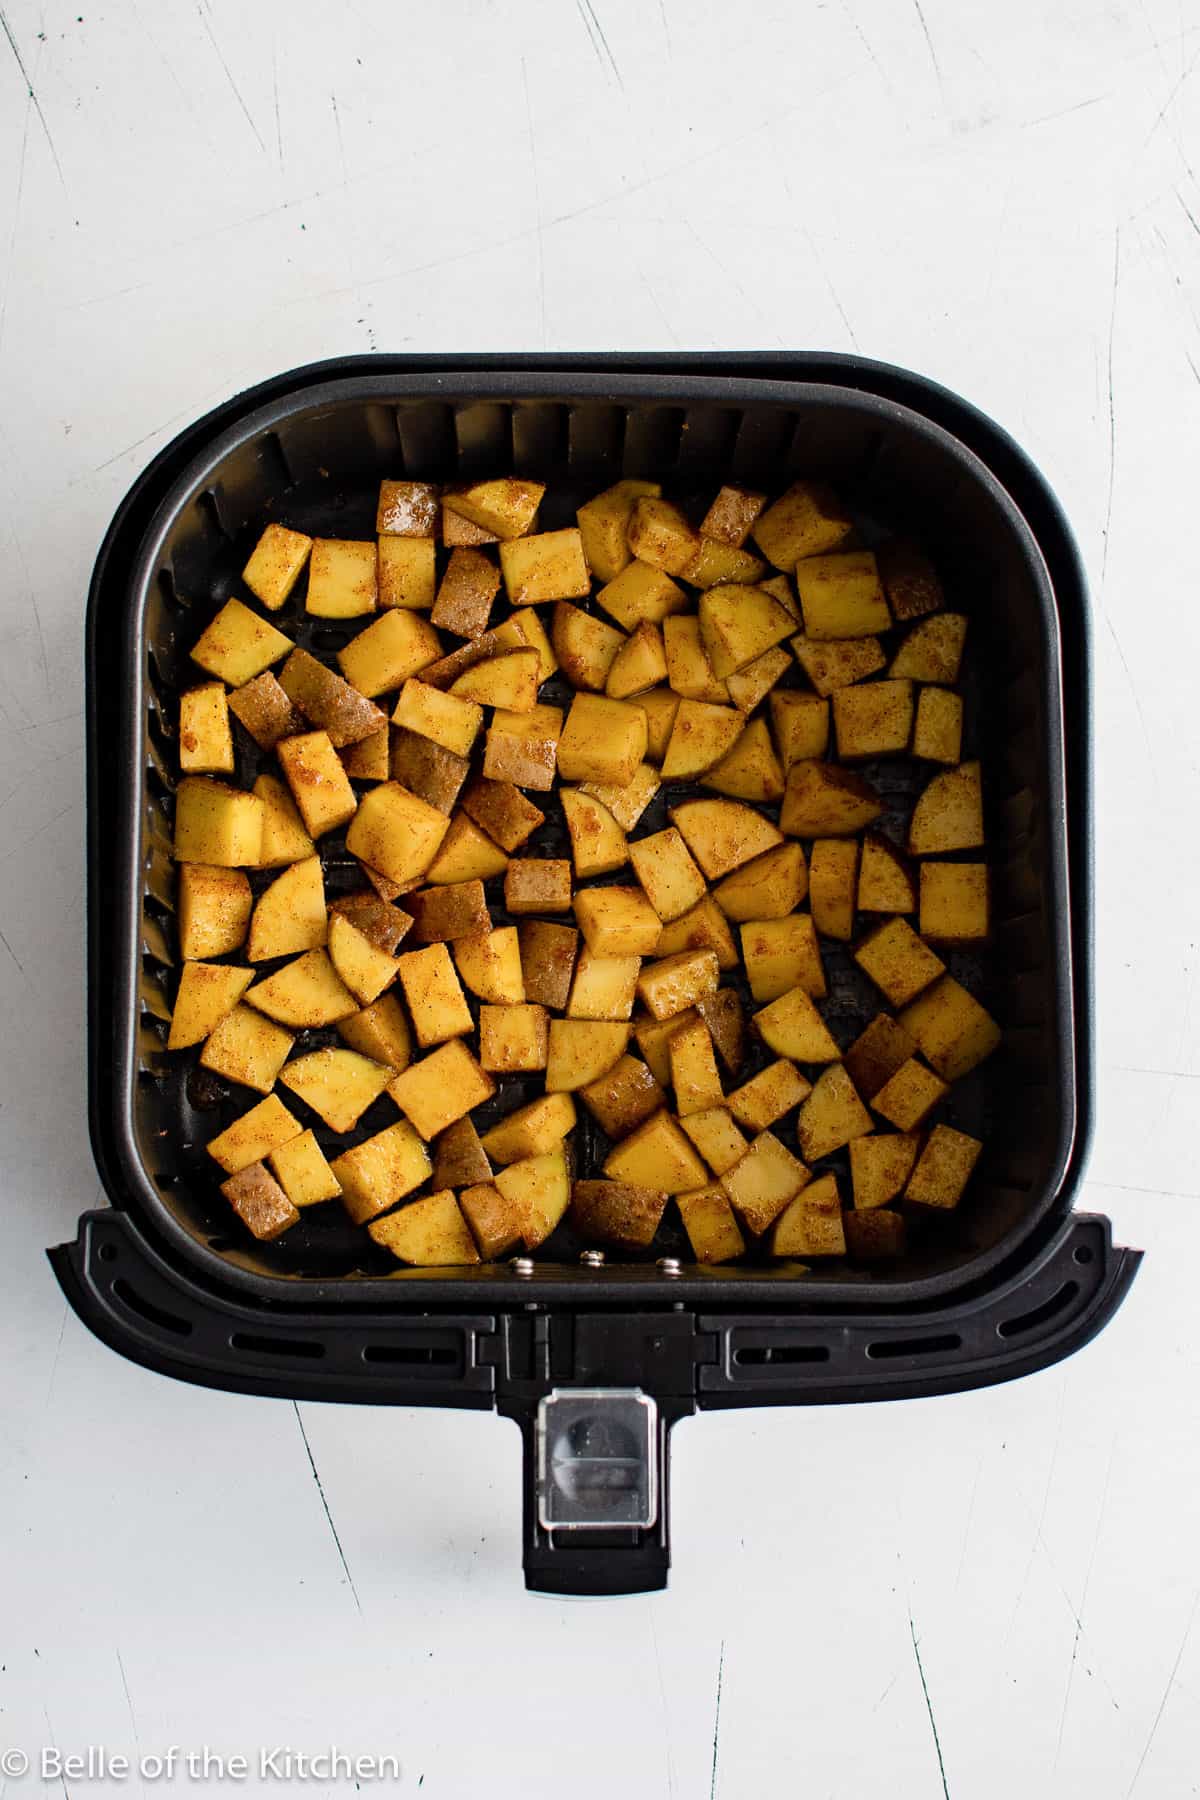 diced potatoes in an air fryer basket.